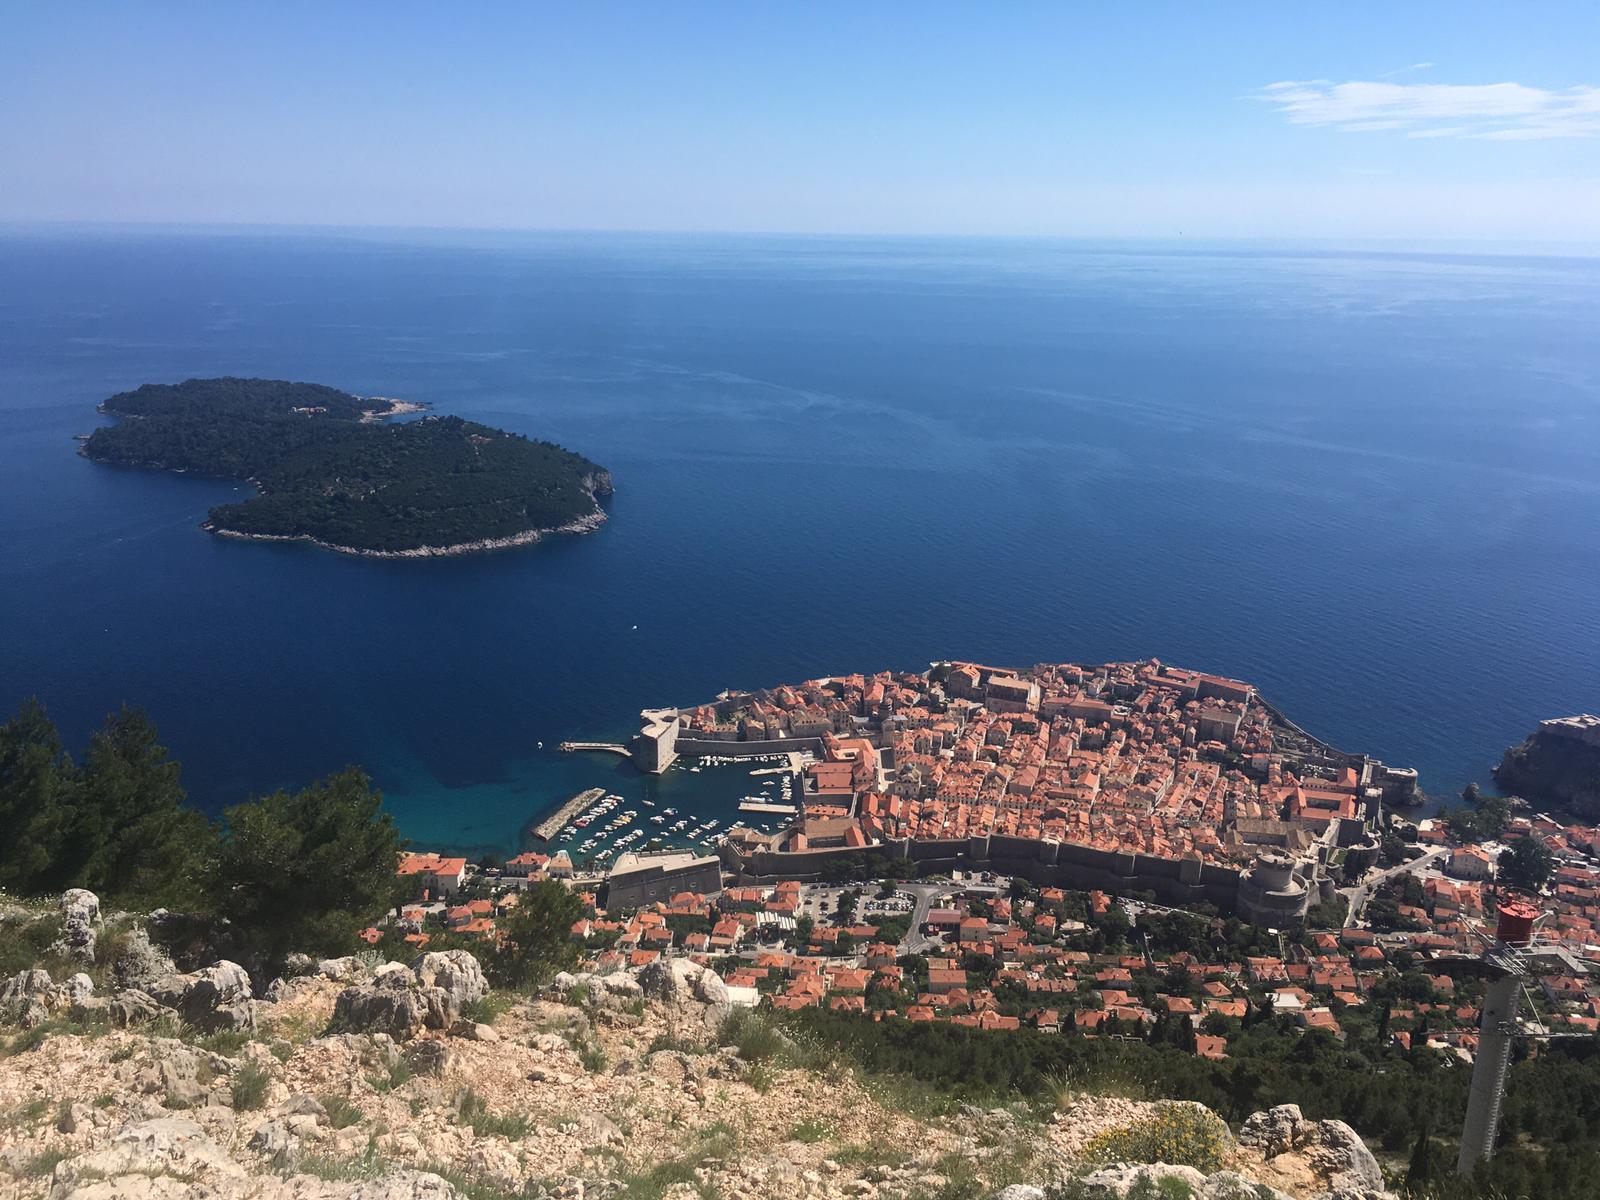 Sightseeing tips in Dubrovnik